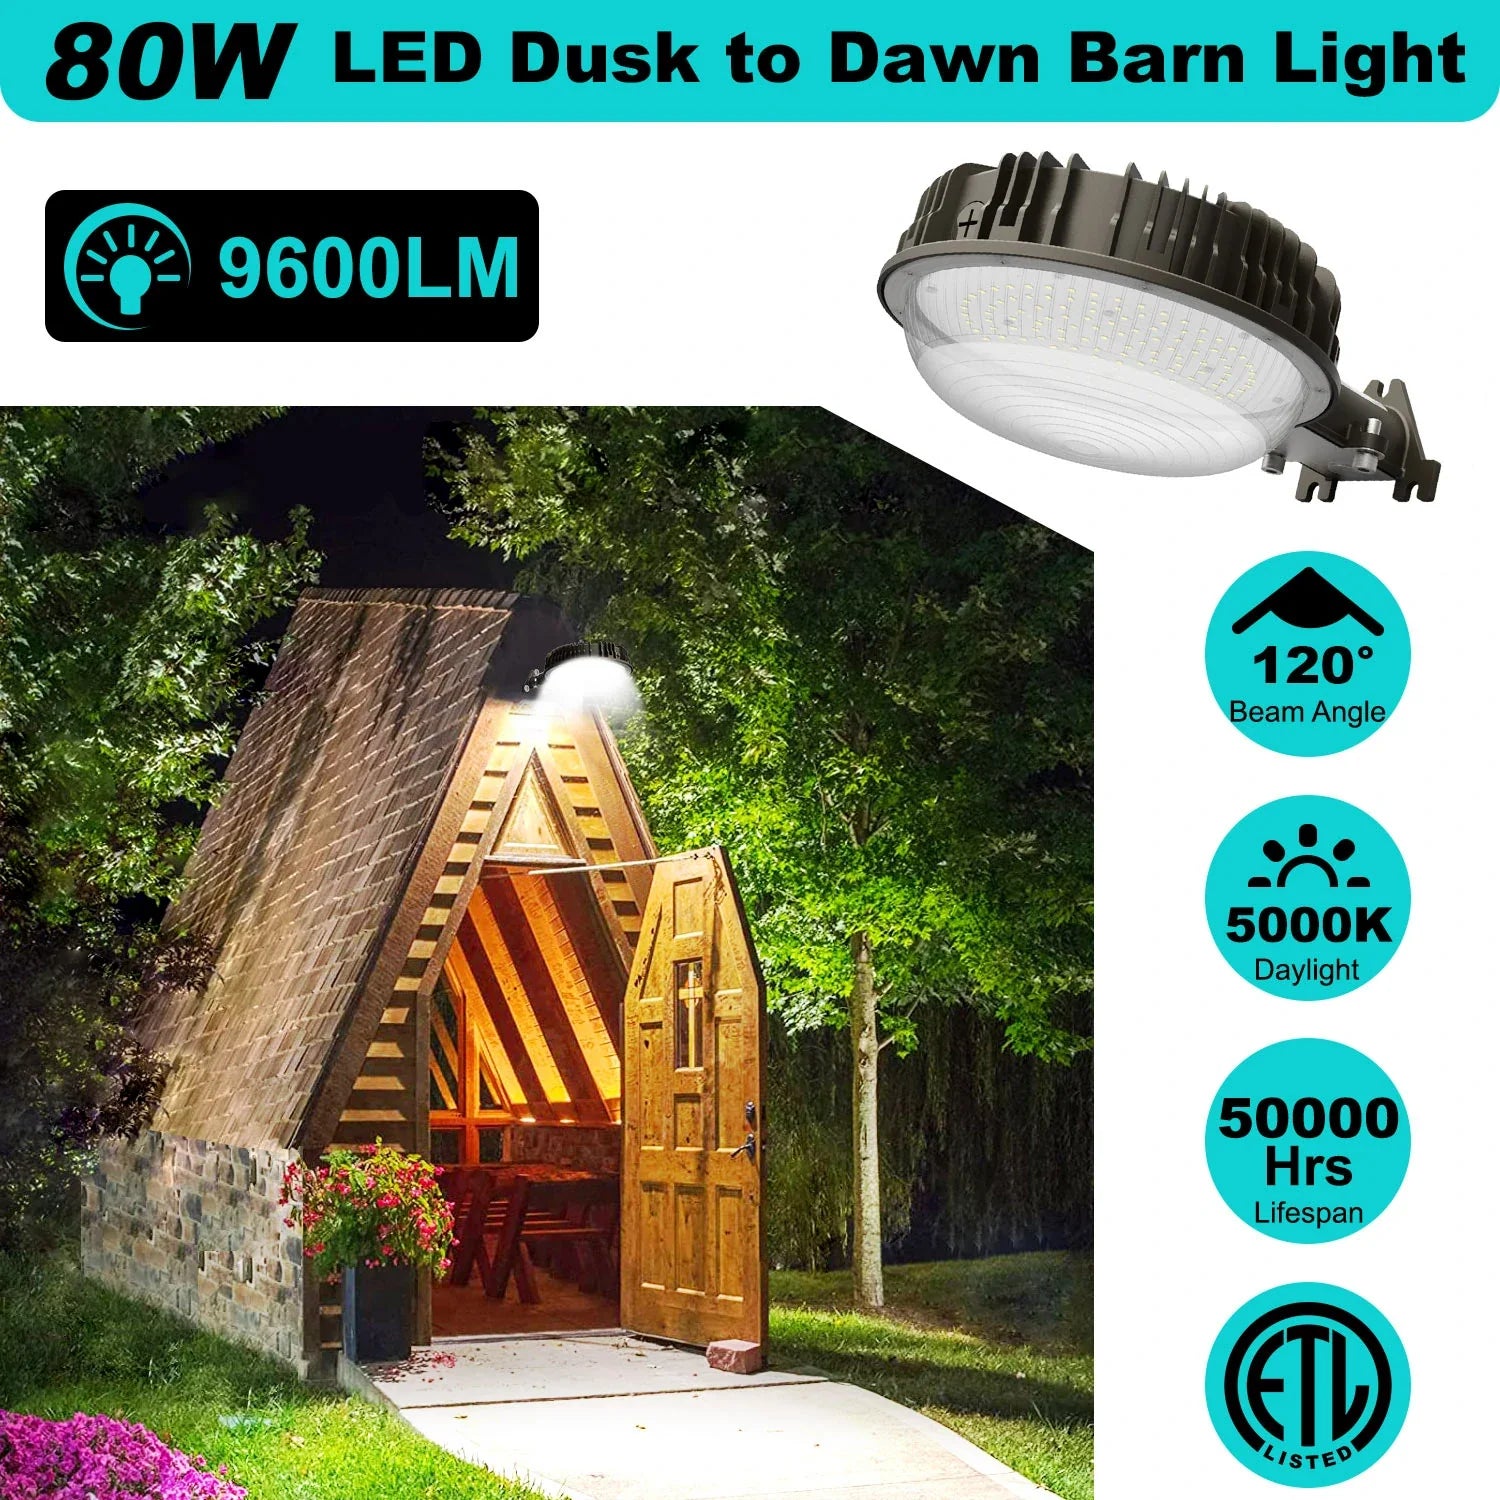 Barn Light 80W 9600LM